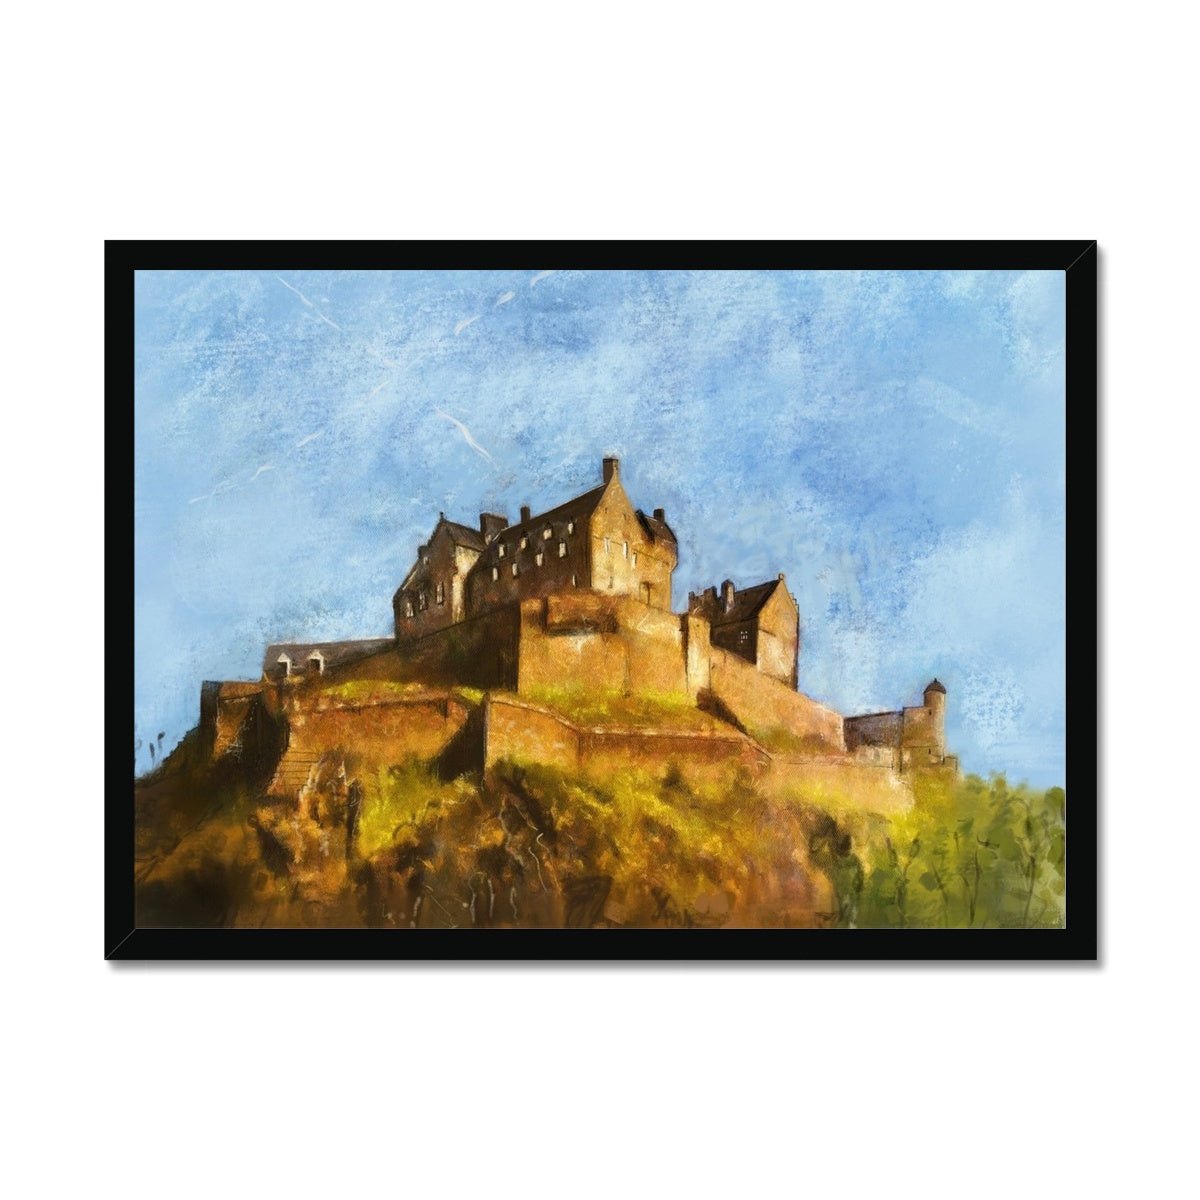 Edinburgh Castle Painting | Framed Prints From Scotland-Framed Prints-Edinburgh & Glasgow Art Gallery-A2 Landscape-Black Frame-Paintings, Prints, Homeware, Art Gifts From Scotland By Scottish Artist Kevin Hunter